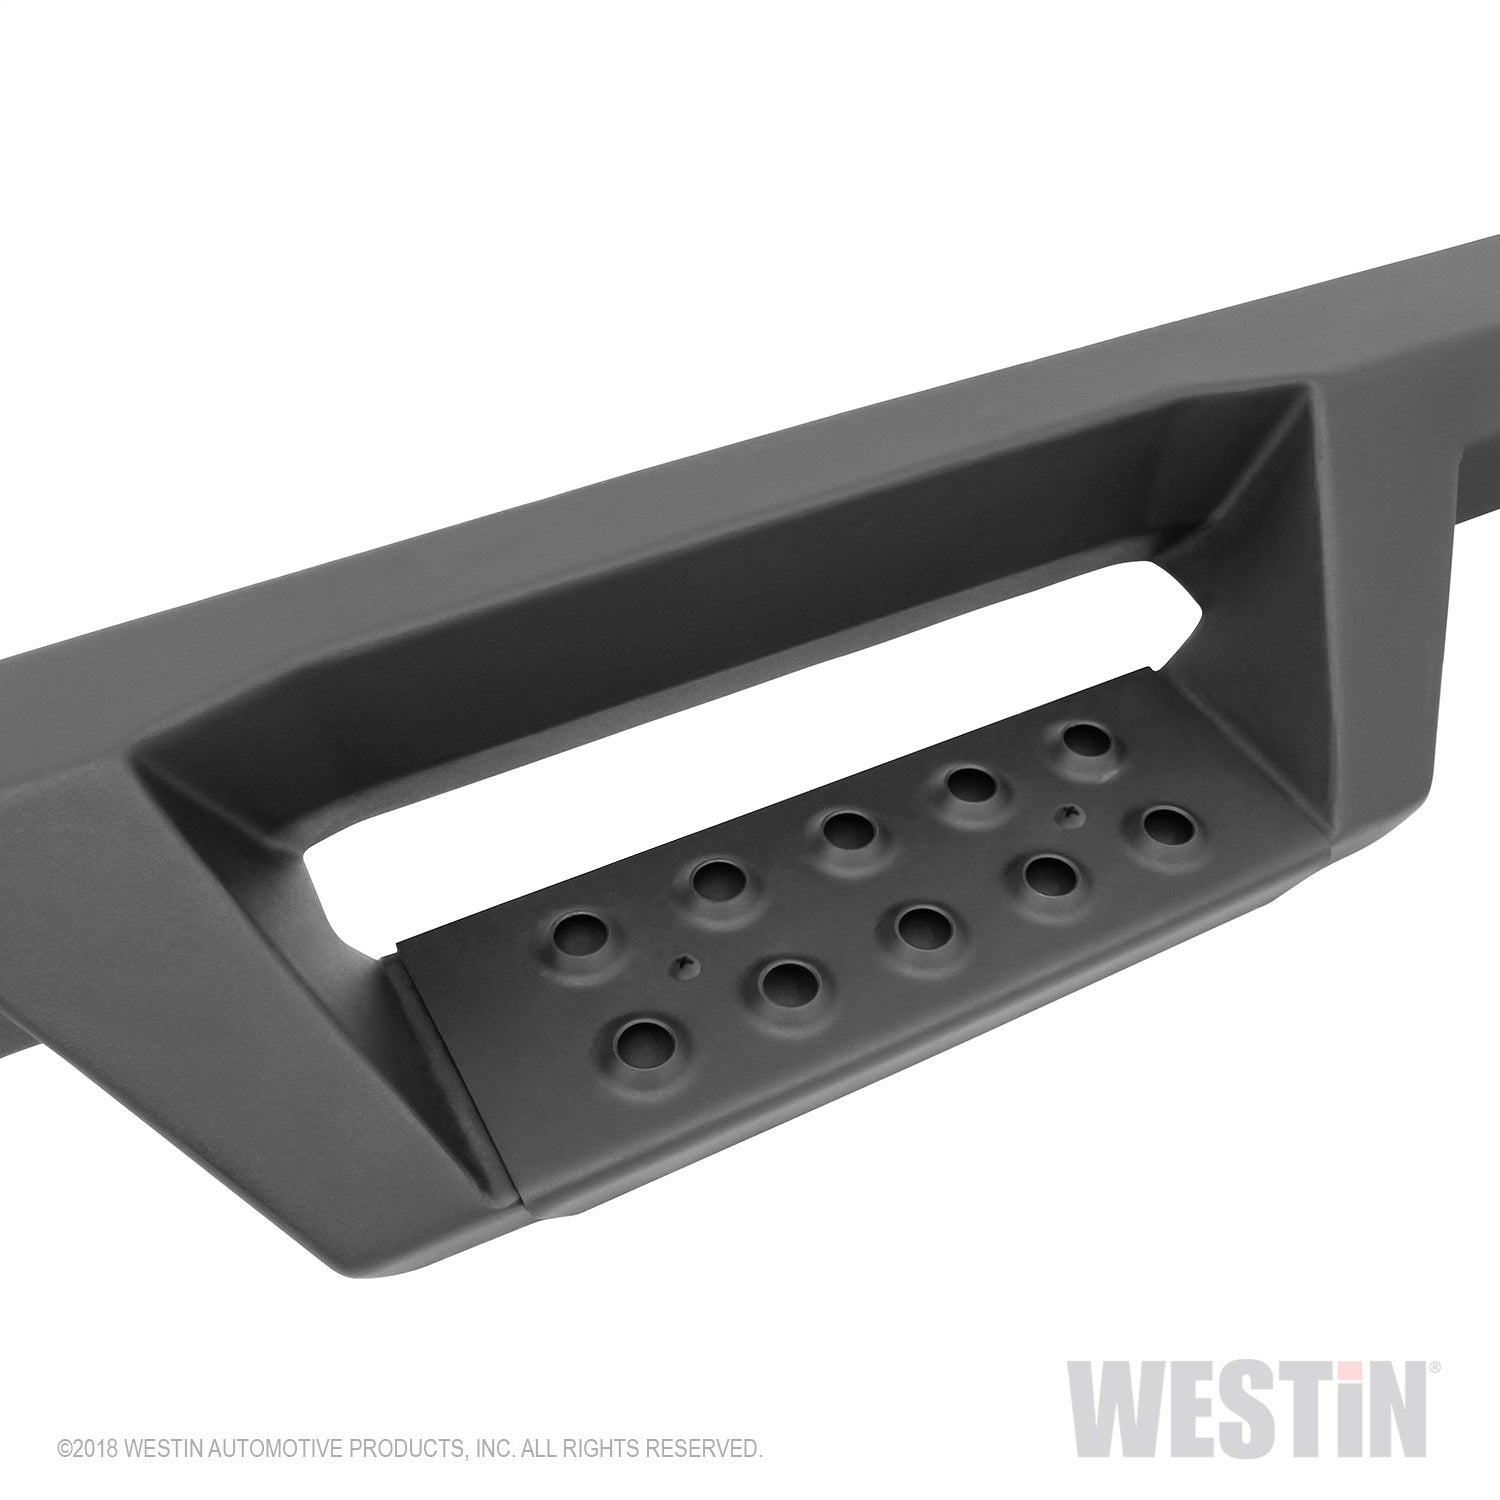 Westin 56-14155 HDX Drop Nerf Step Bars Fits 19-21 Ranger